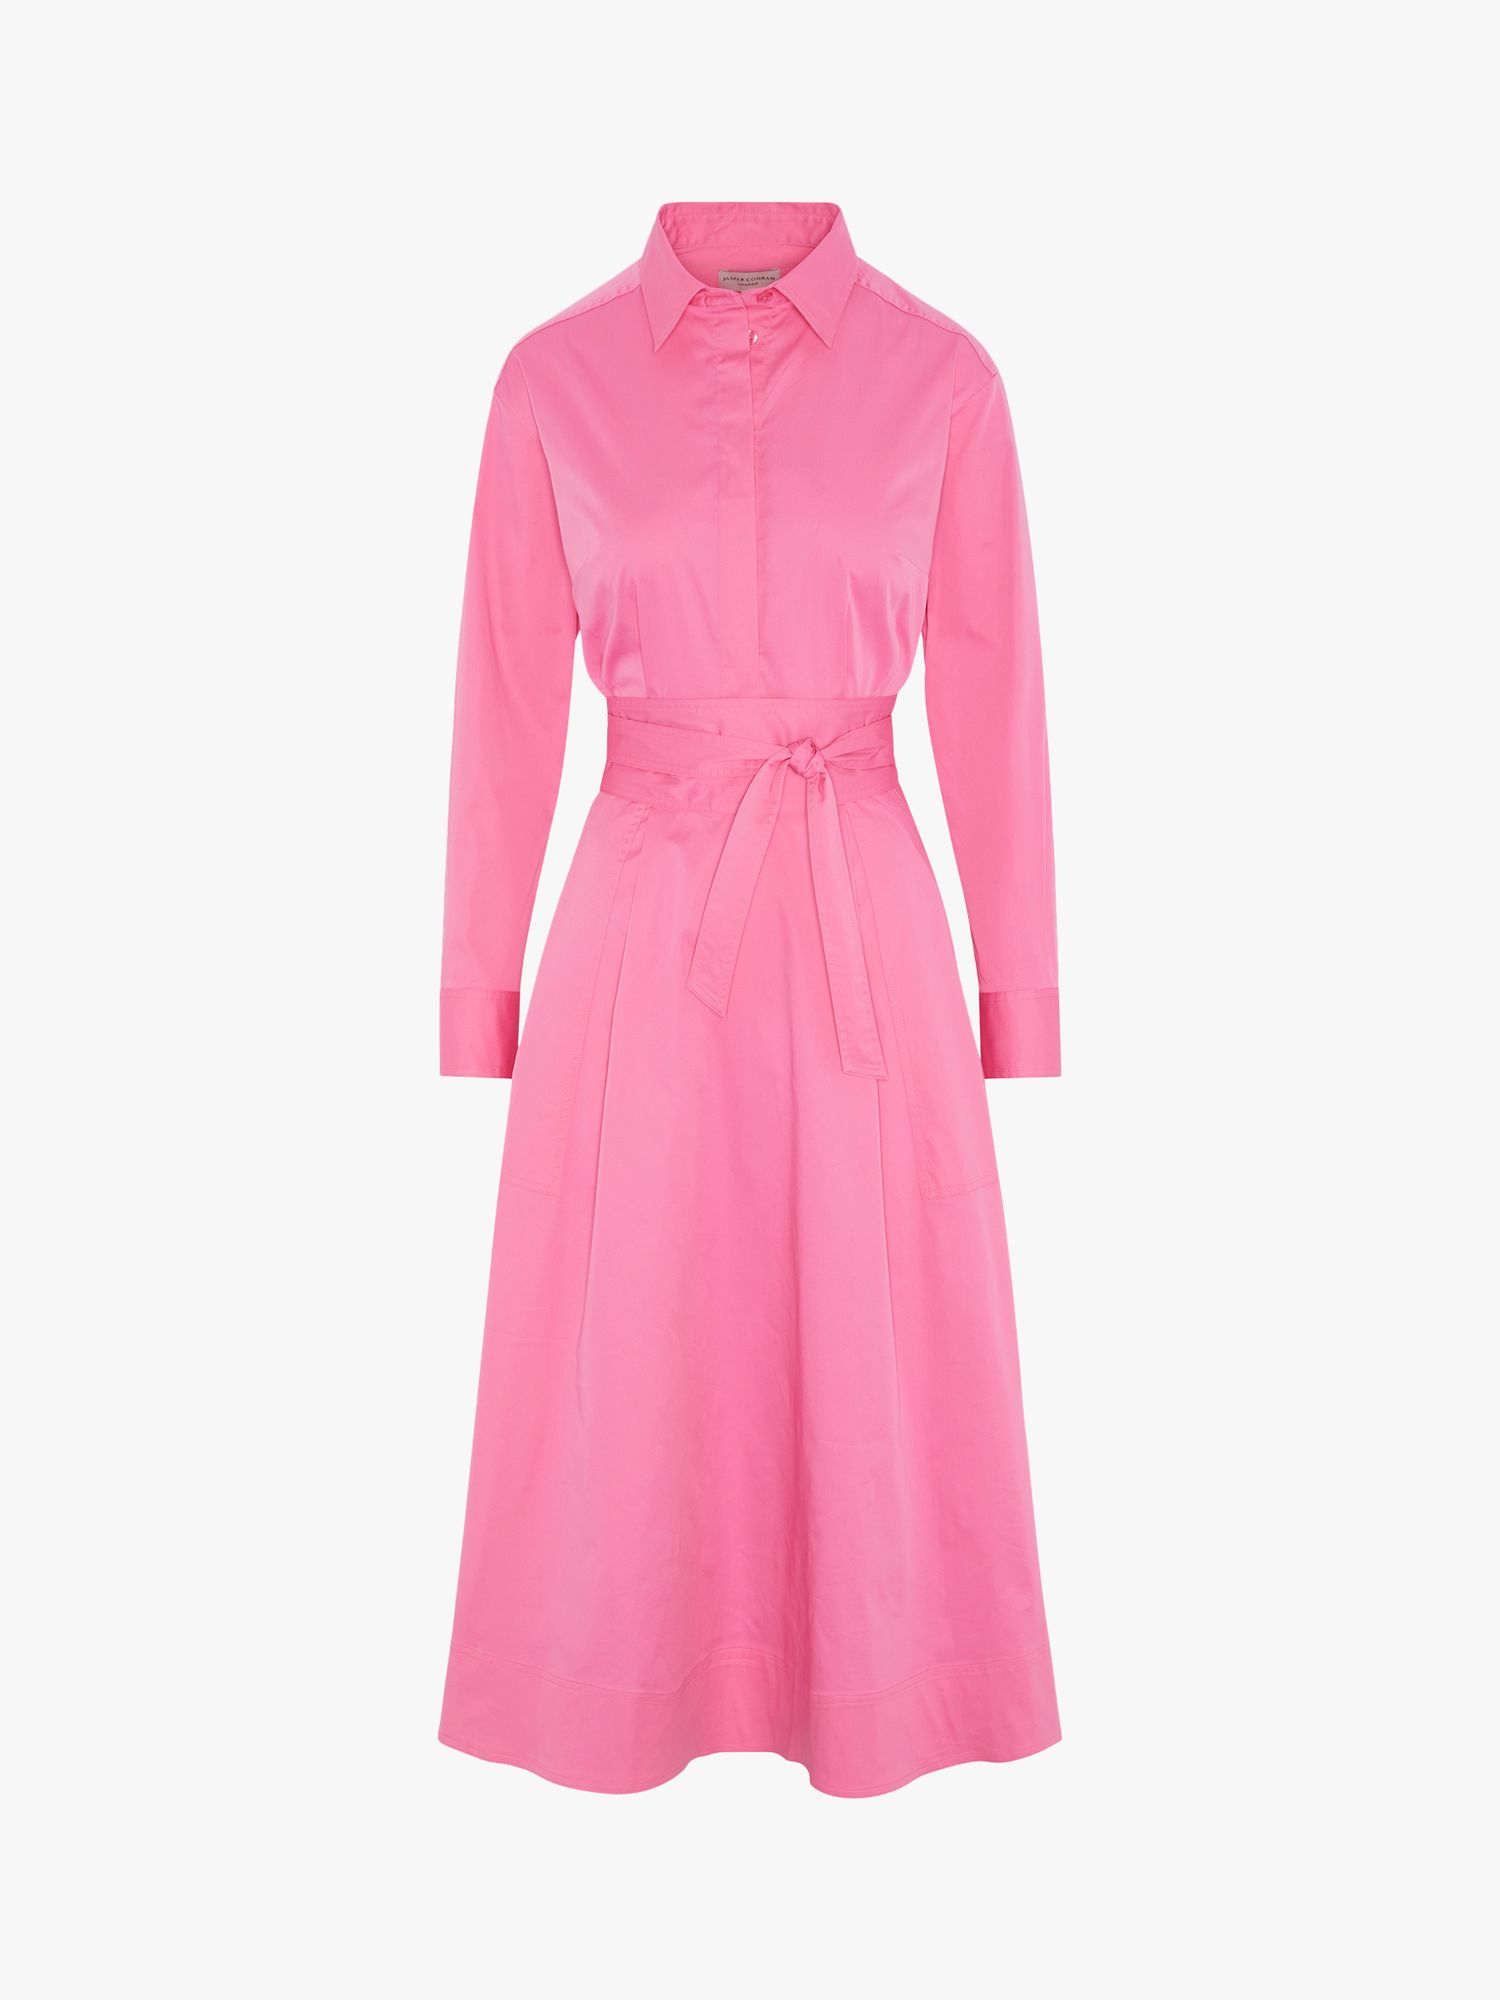 Jasper Conran Blythe Shirt Midi Dress, Hot Pink, 10